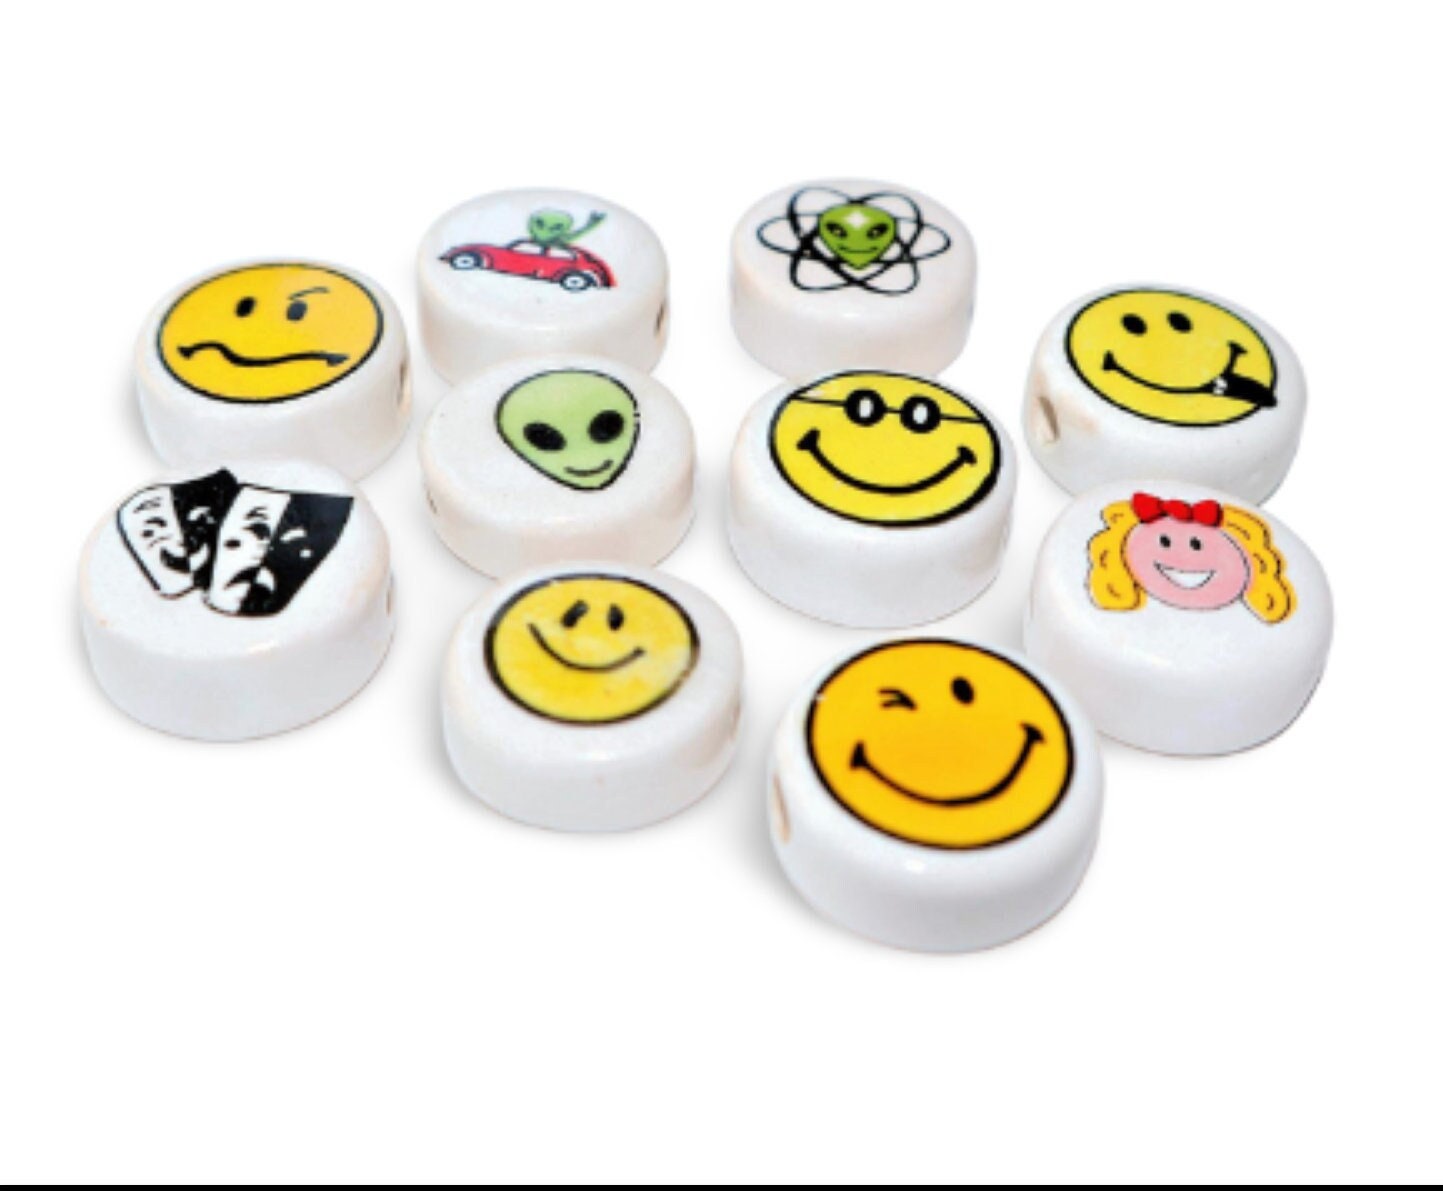 REGLET 650 Square Letter Beads & 65 Emojis for Art & Craft